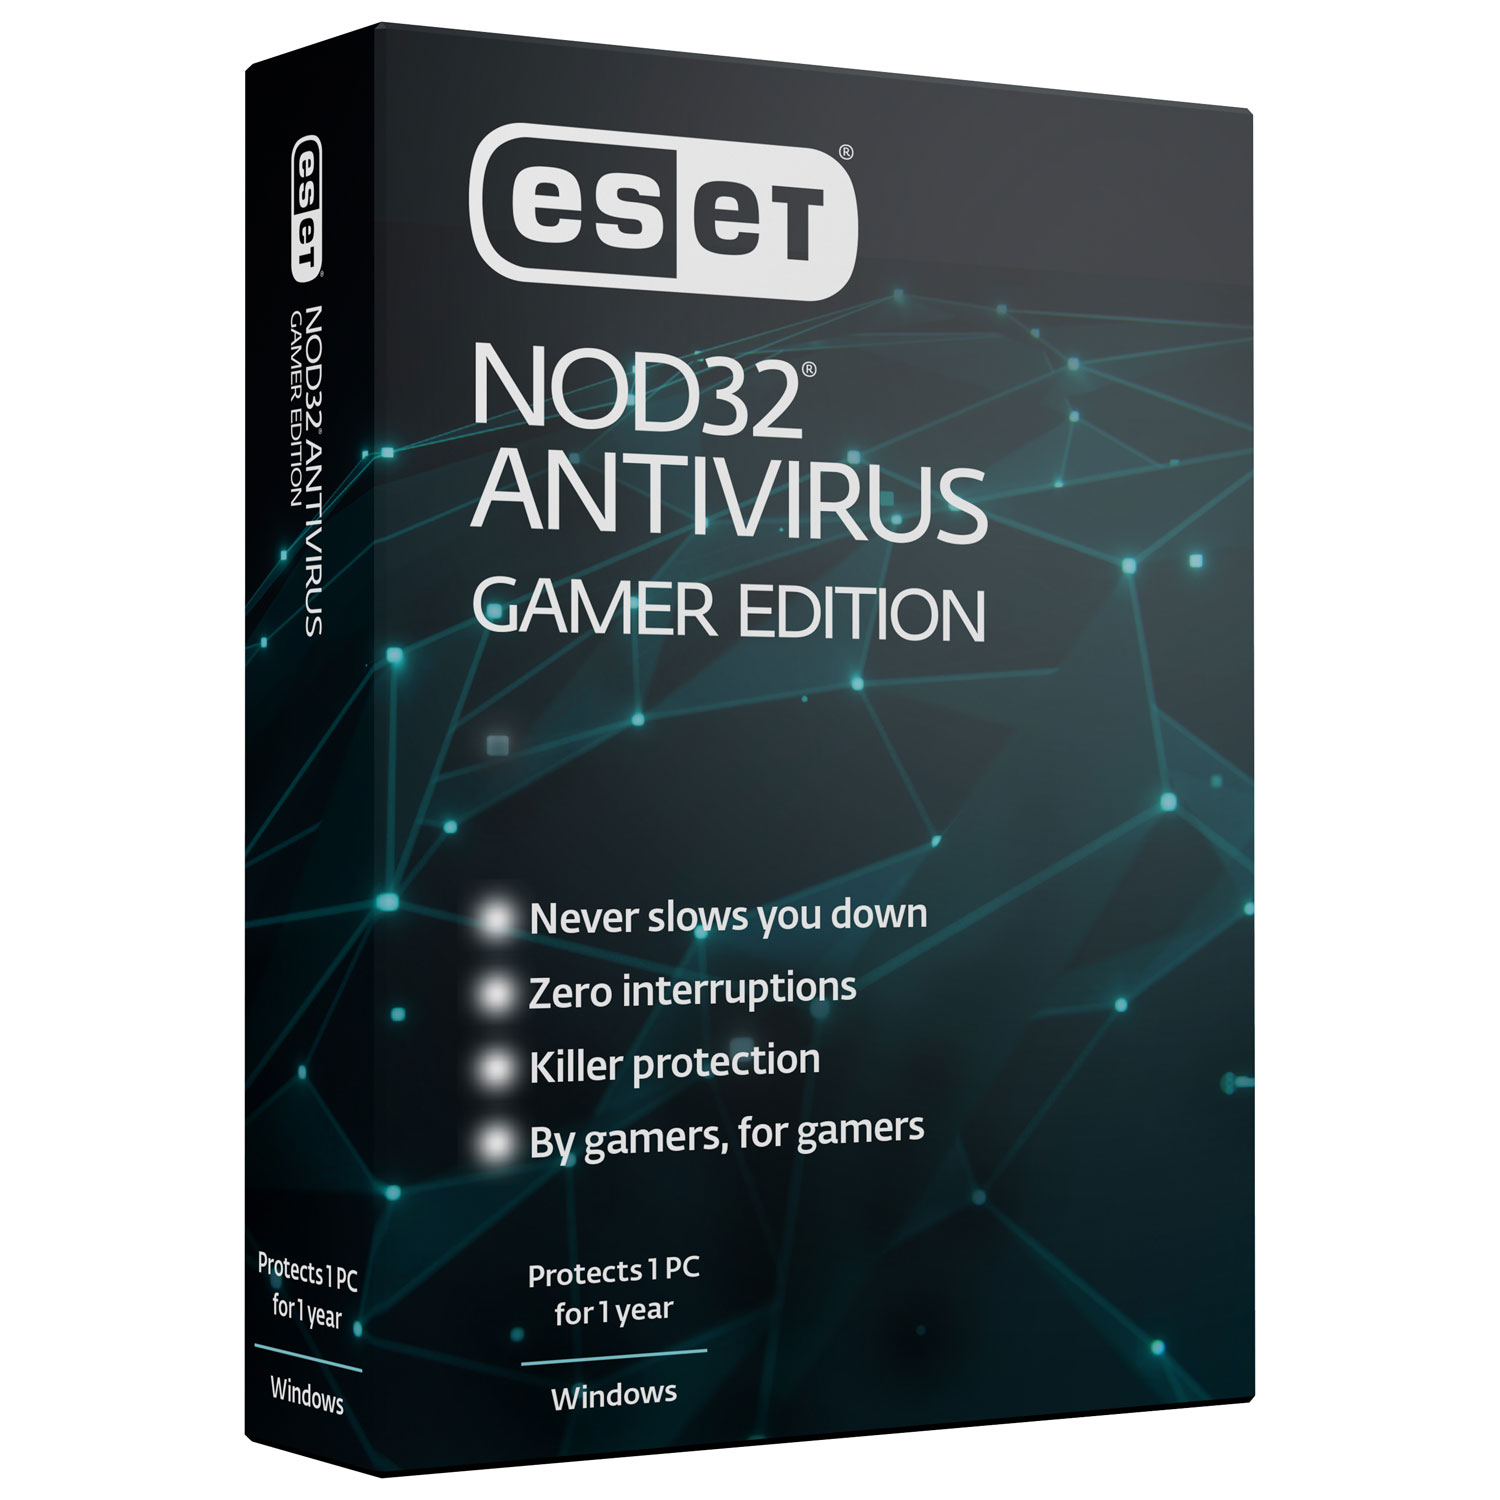 ESET NOD32 Antivirus Gamer Edition (PC) - 1 Device - 1 Year